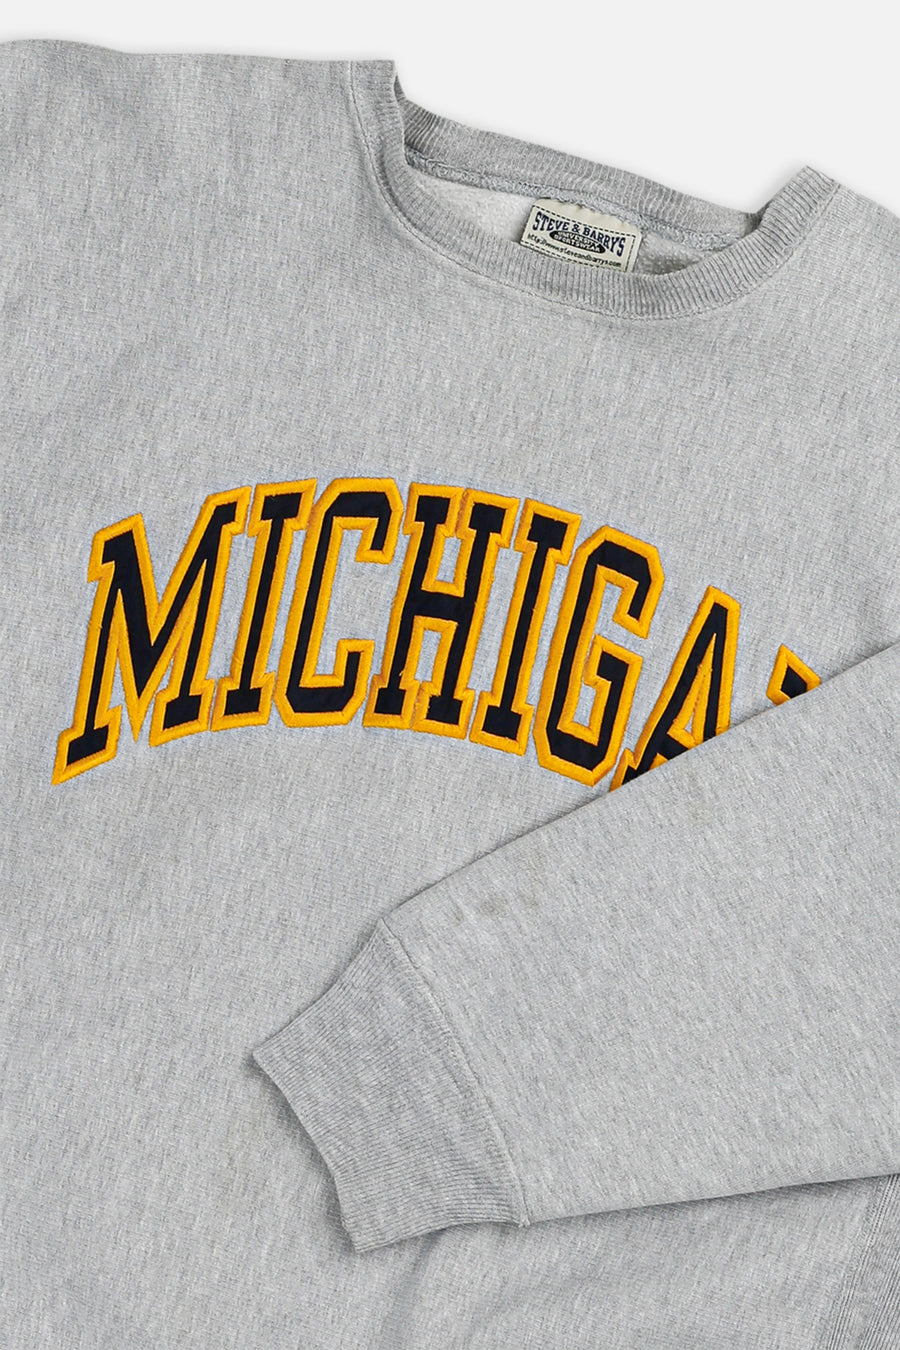 Vintage Michigan Sweatshirt - S